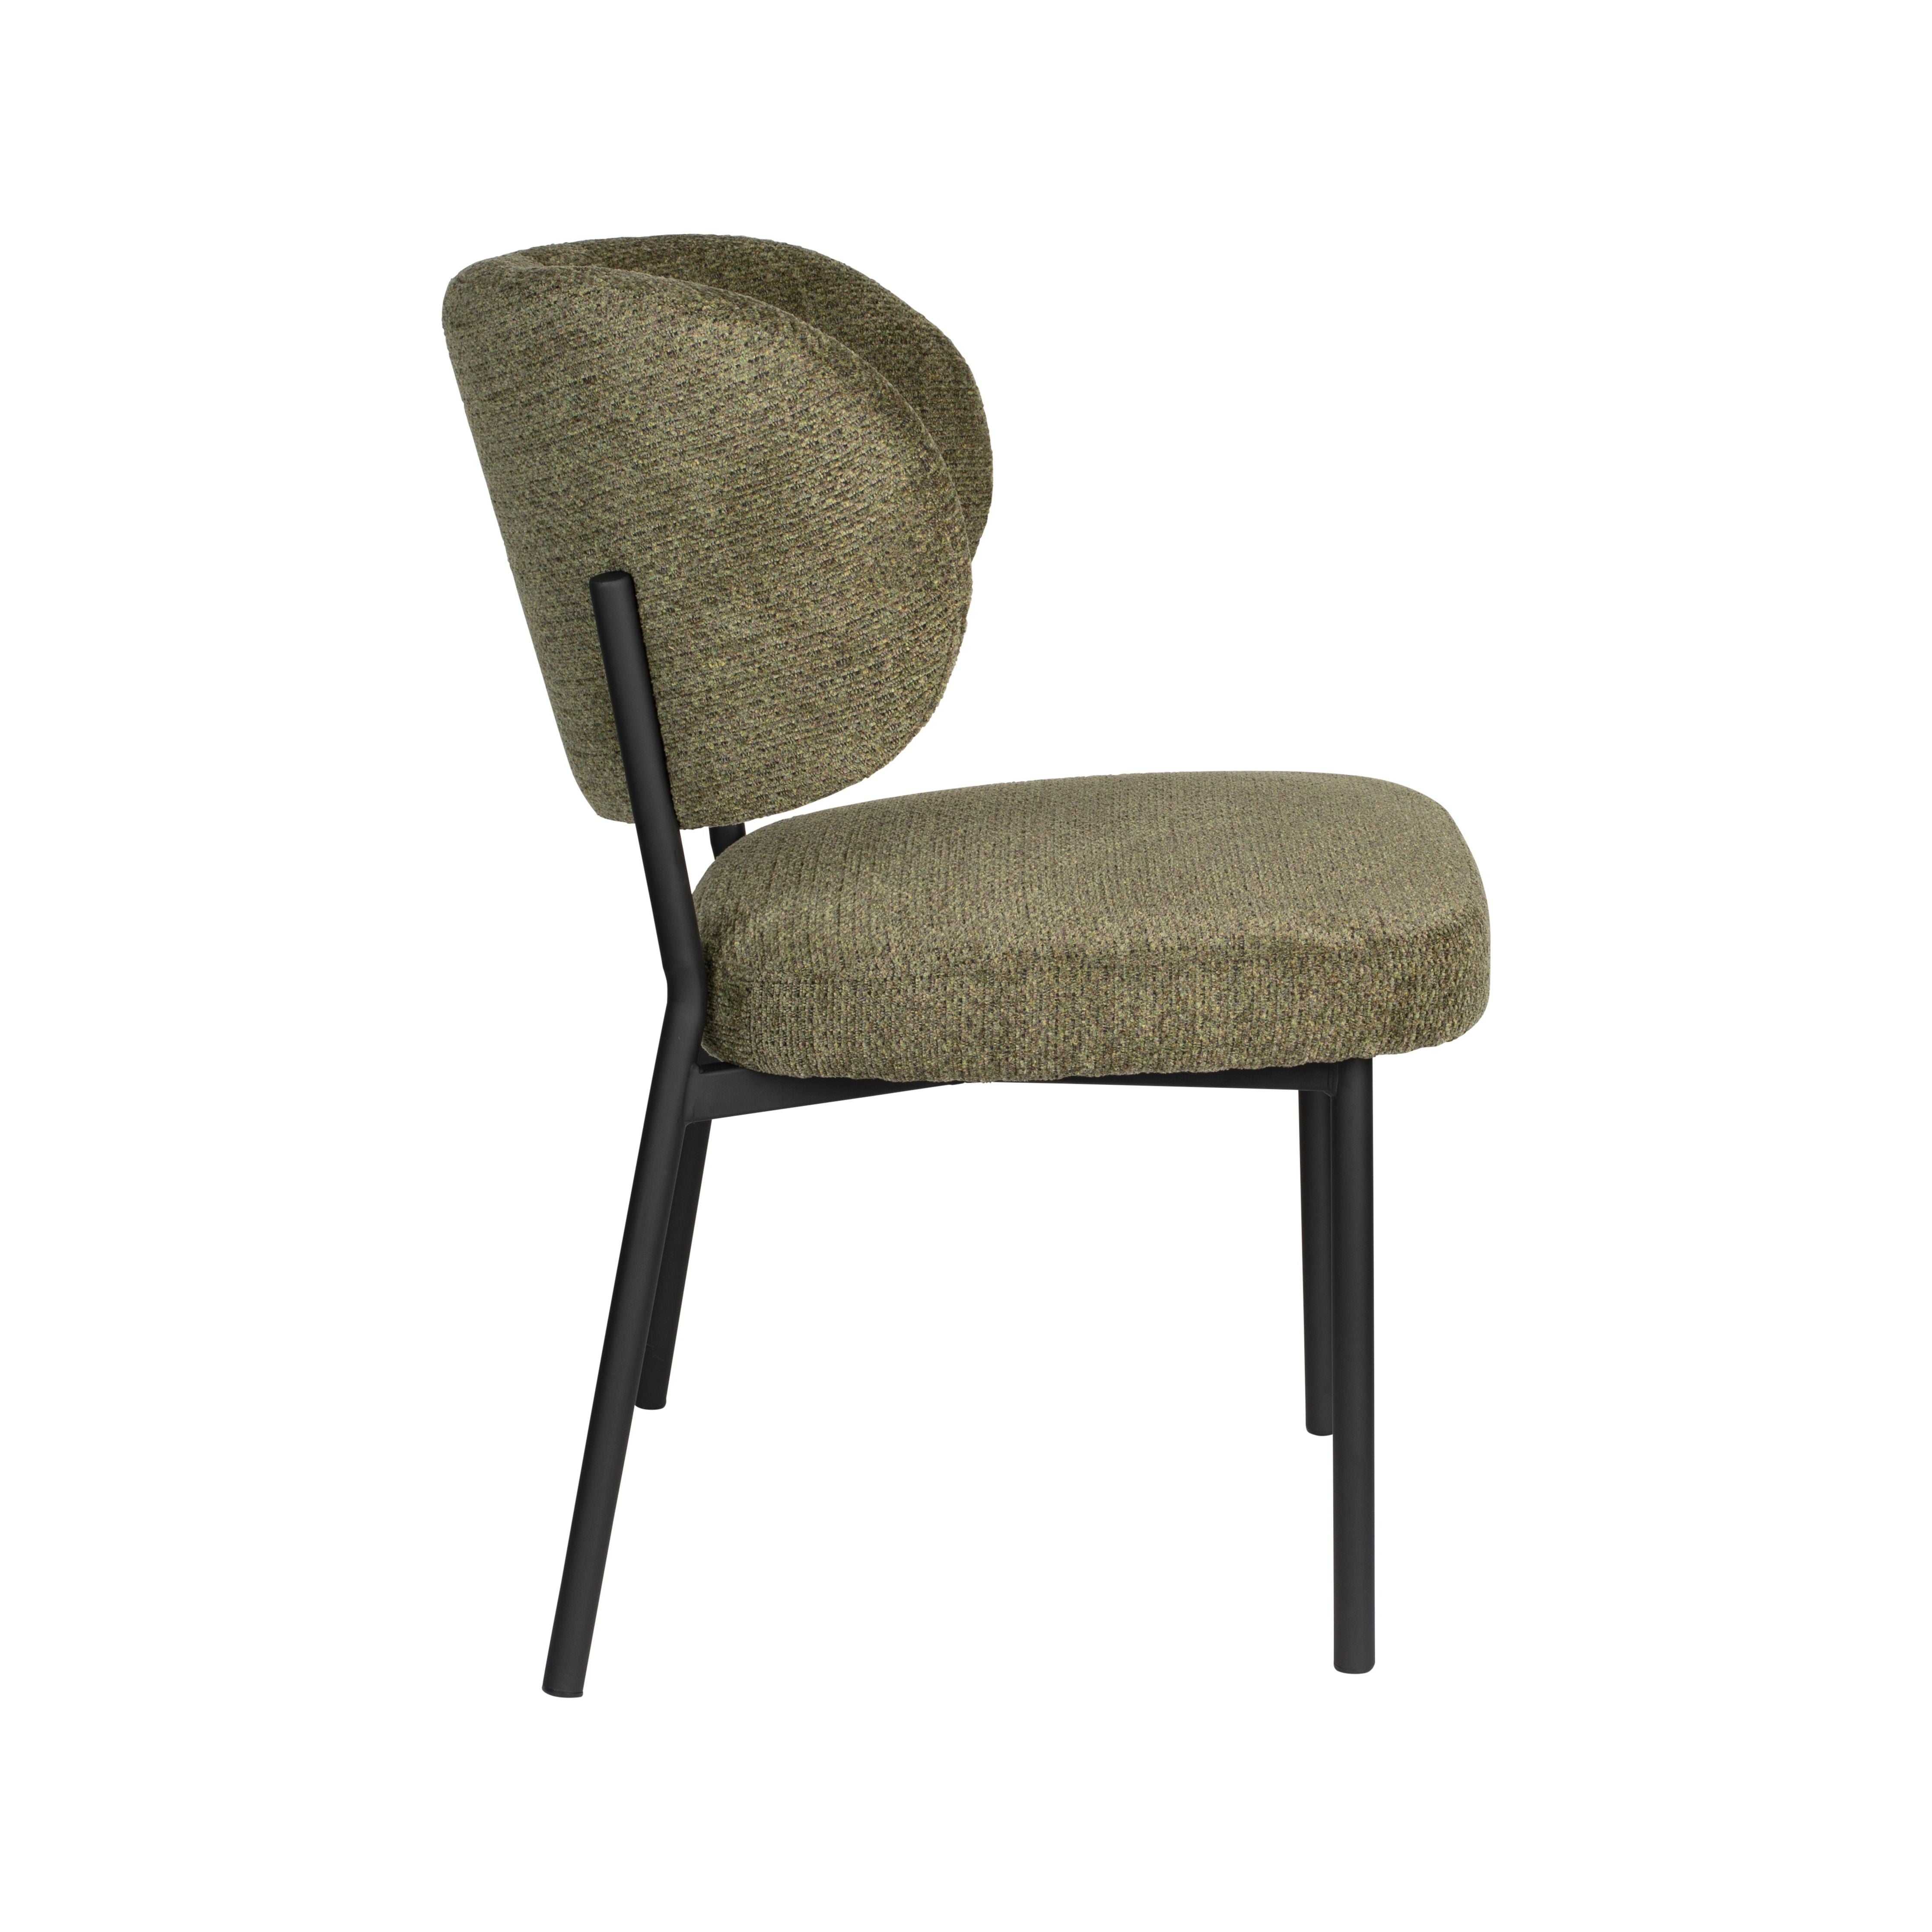 Chair sanne green gray | 2 pieces